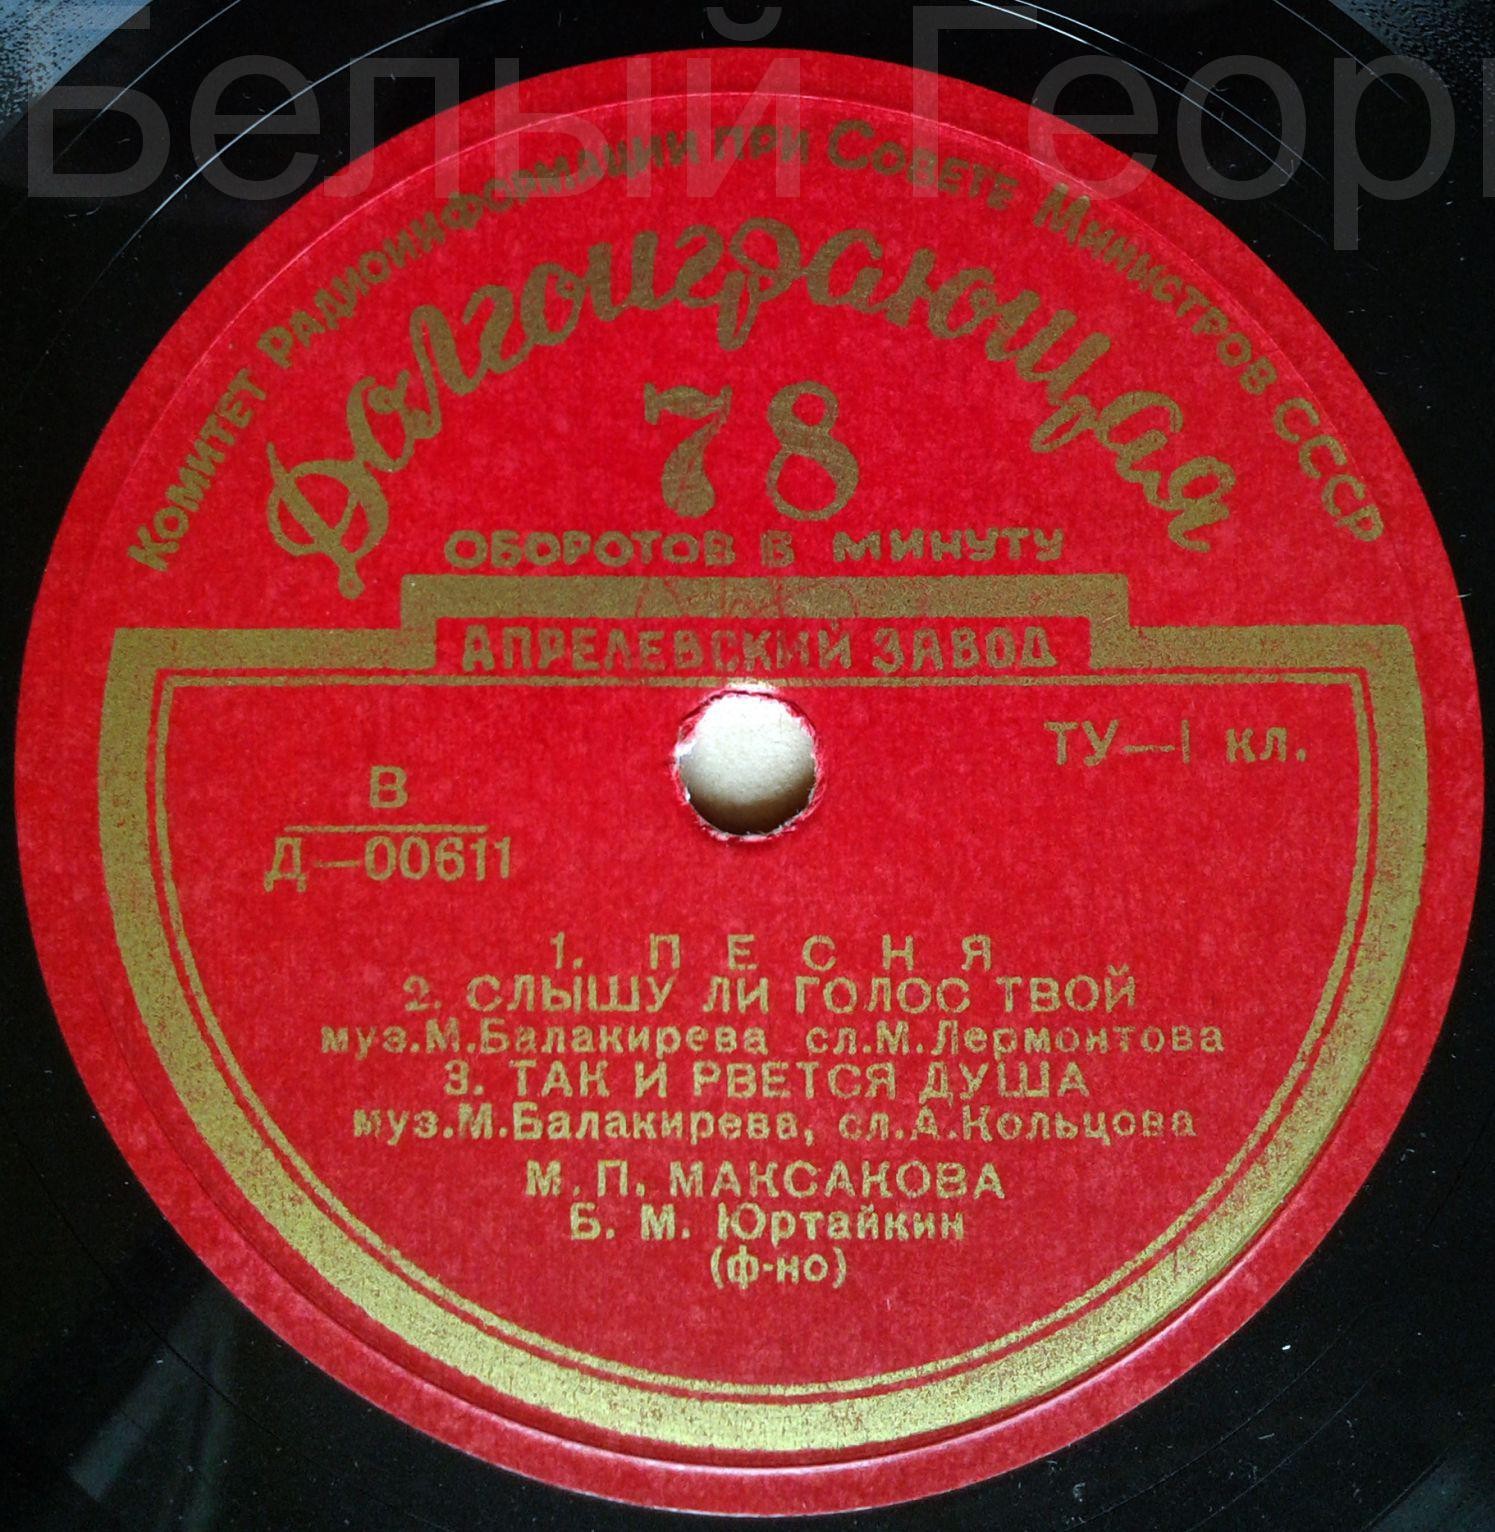 Мария МАКСАКОВА (меццо-сопрано): Романсы М. Балакирева